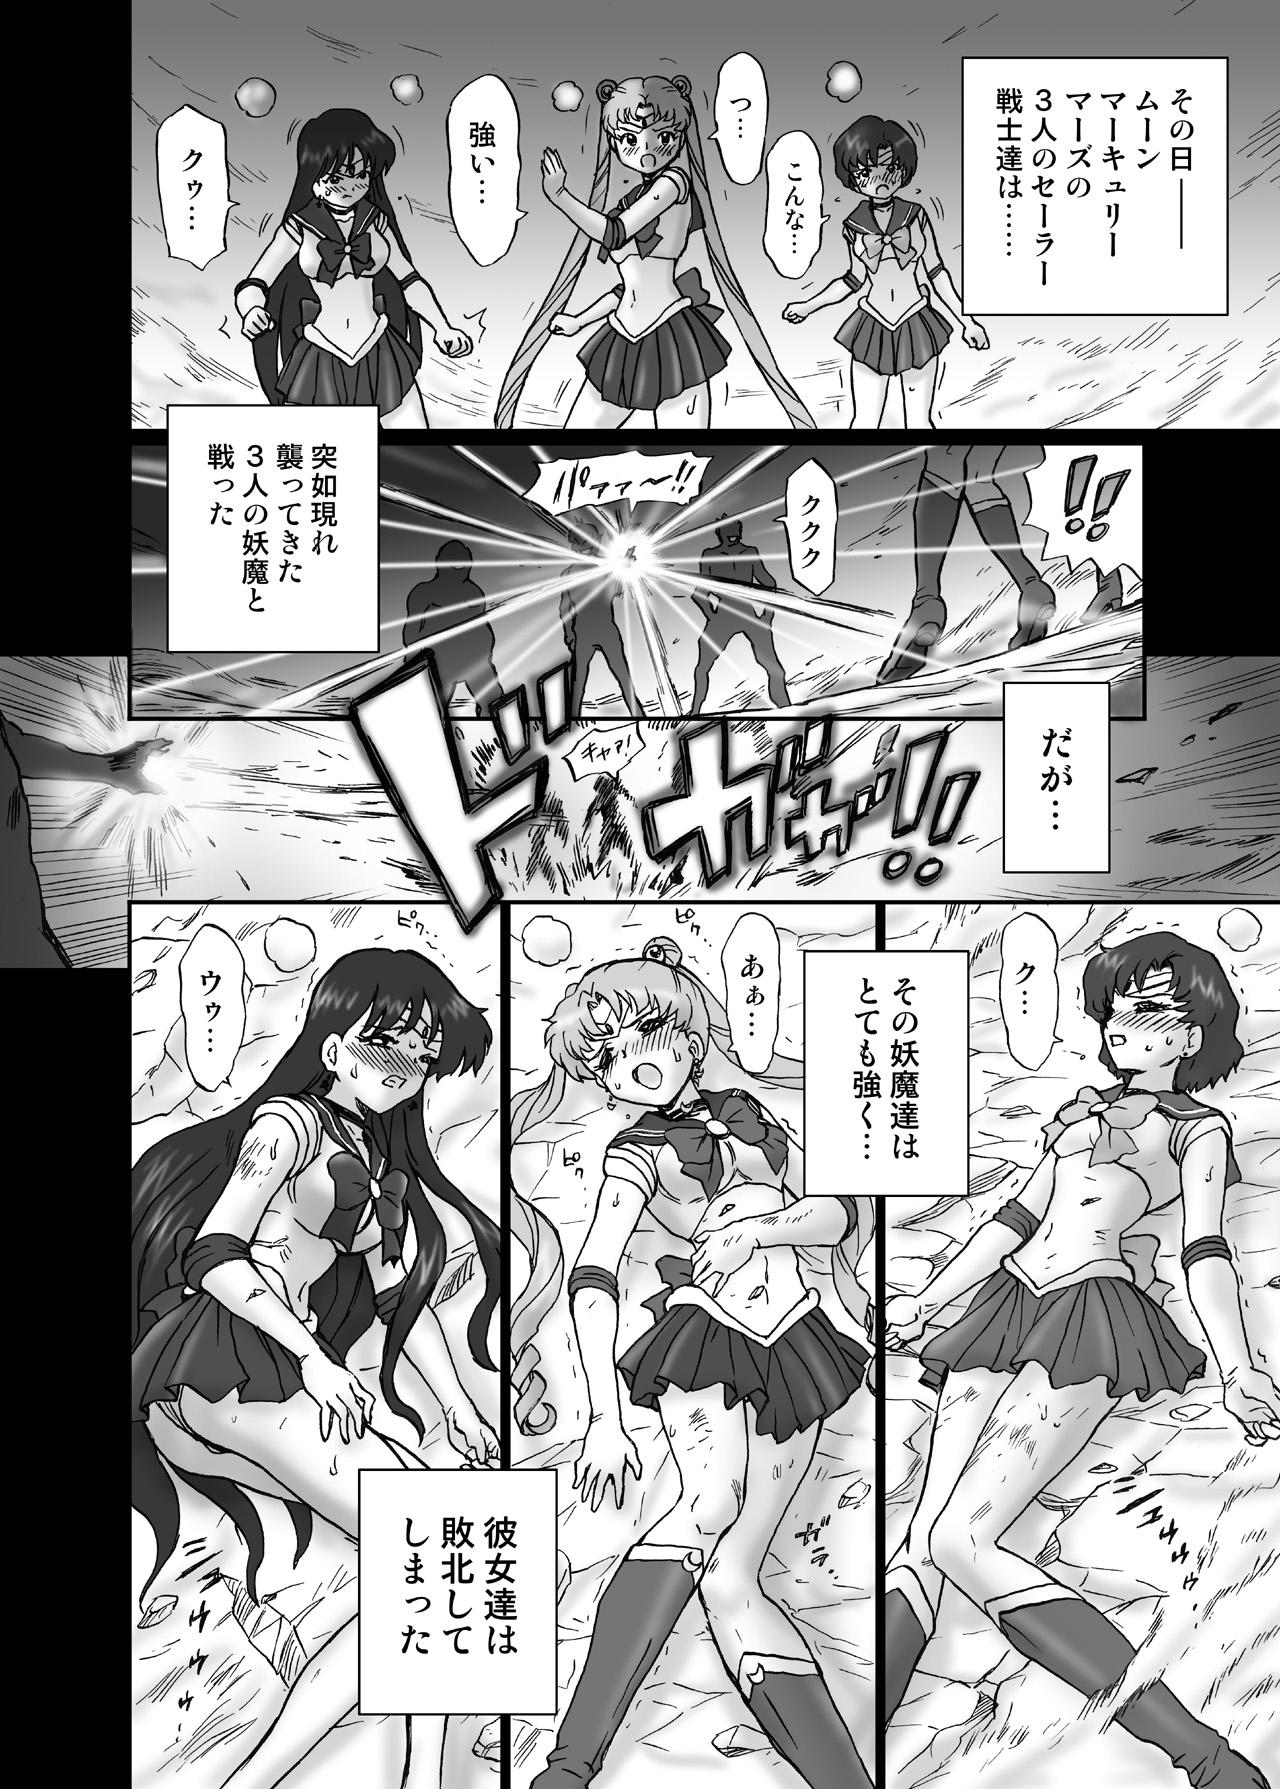 Realamateur IRIE YAMAZAKI "Sailor Moon" Anal & Scatolo Sakuhinshuu Ver. 1 - Sailor moon New - Page 3